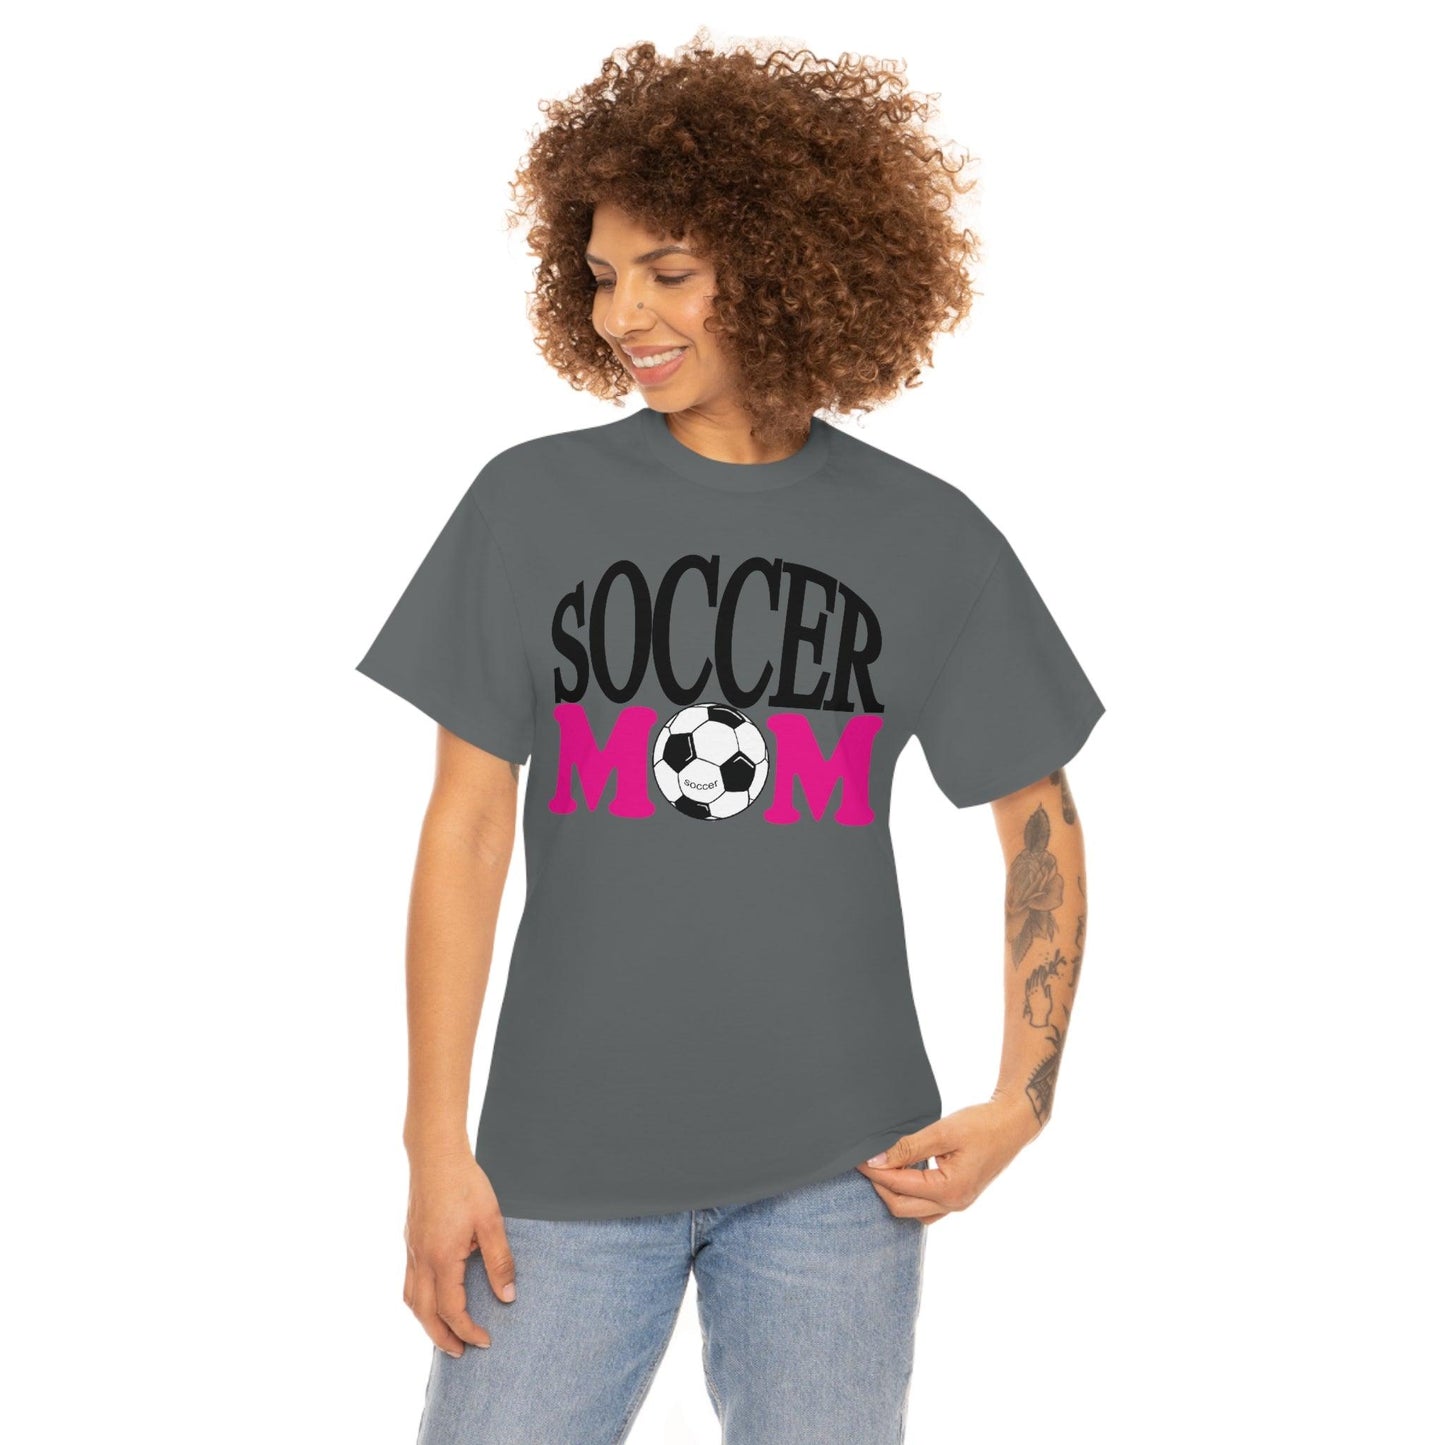 Soccer Mom Tee